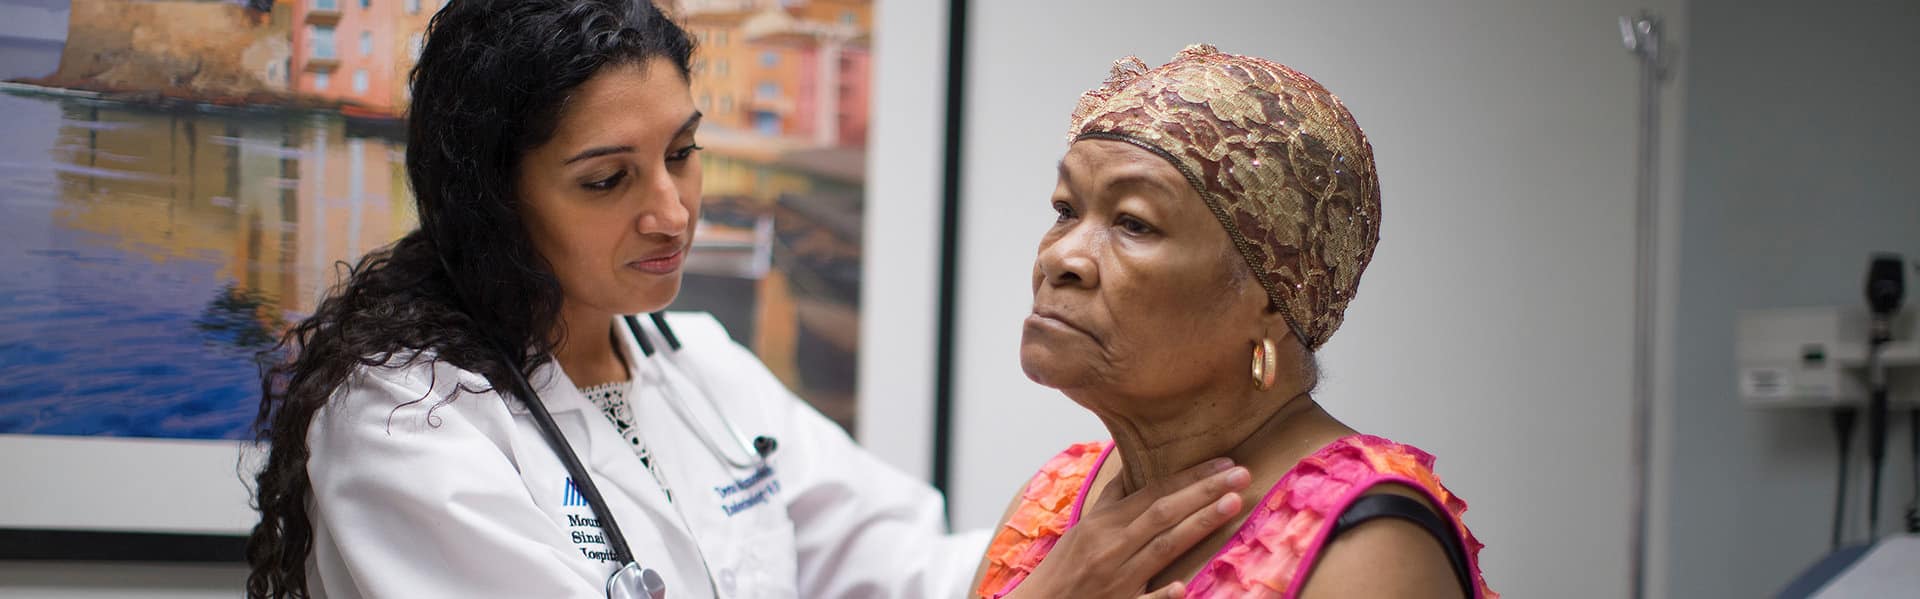 Dr. Deena Adimoolam examines patient